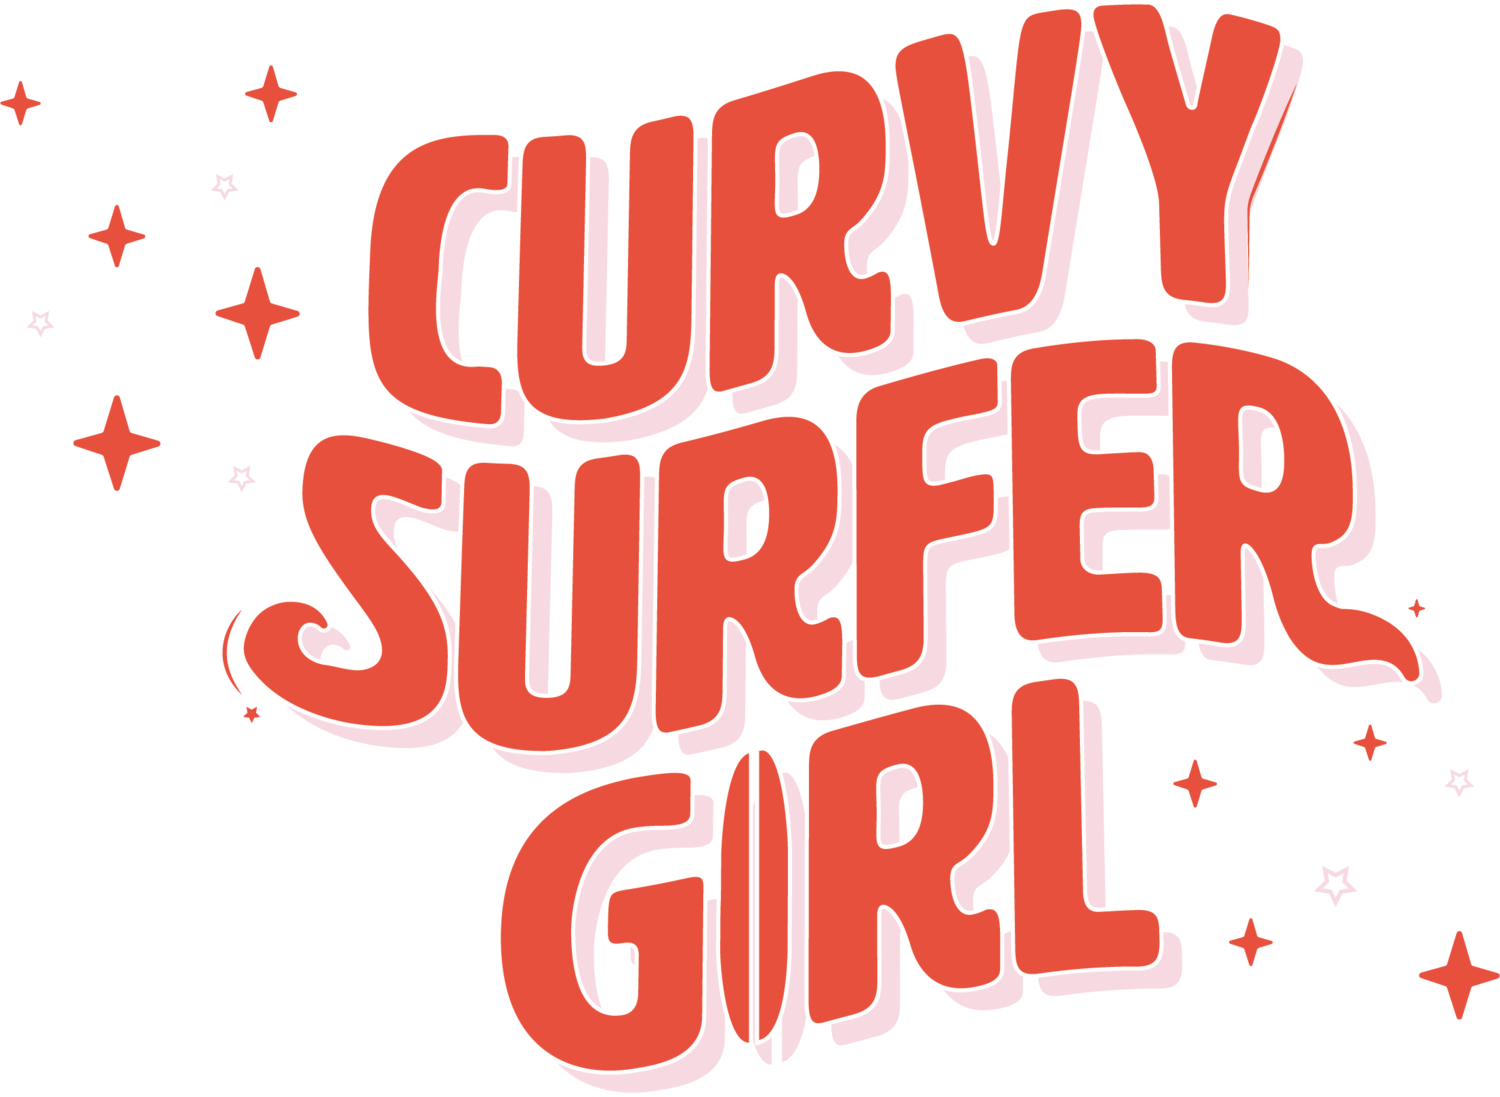 Curvy Surfer Girl